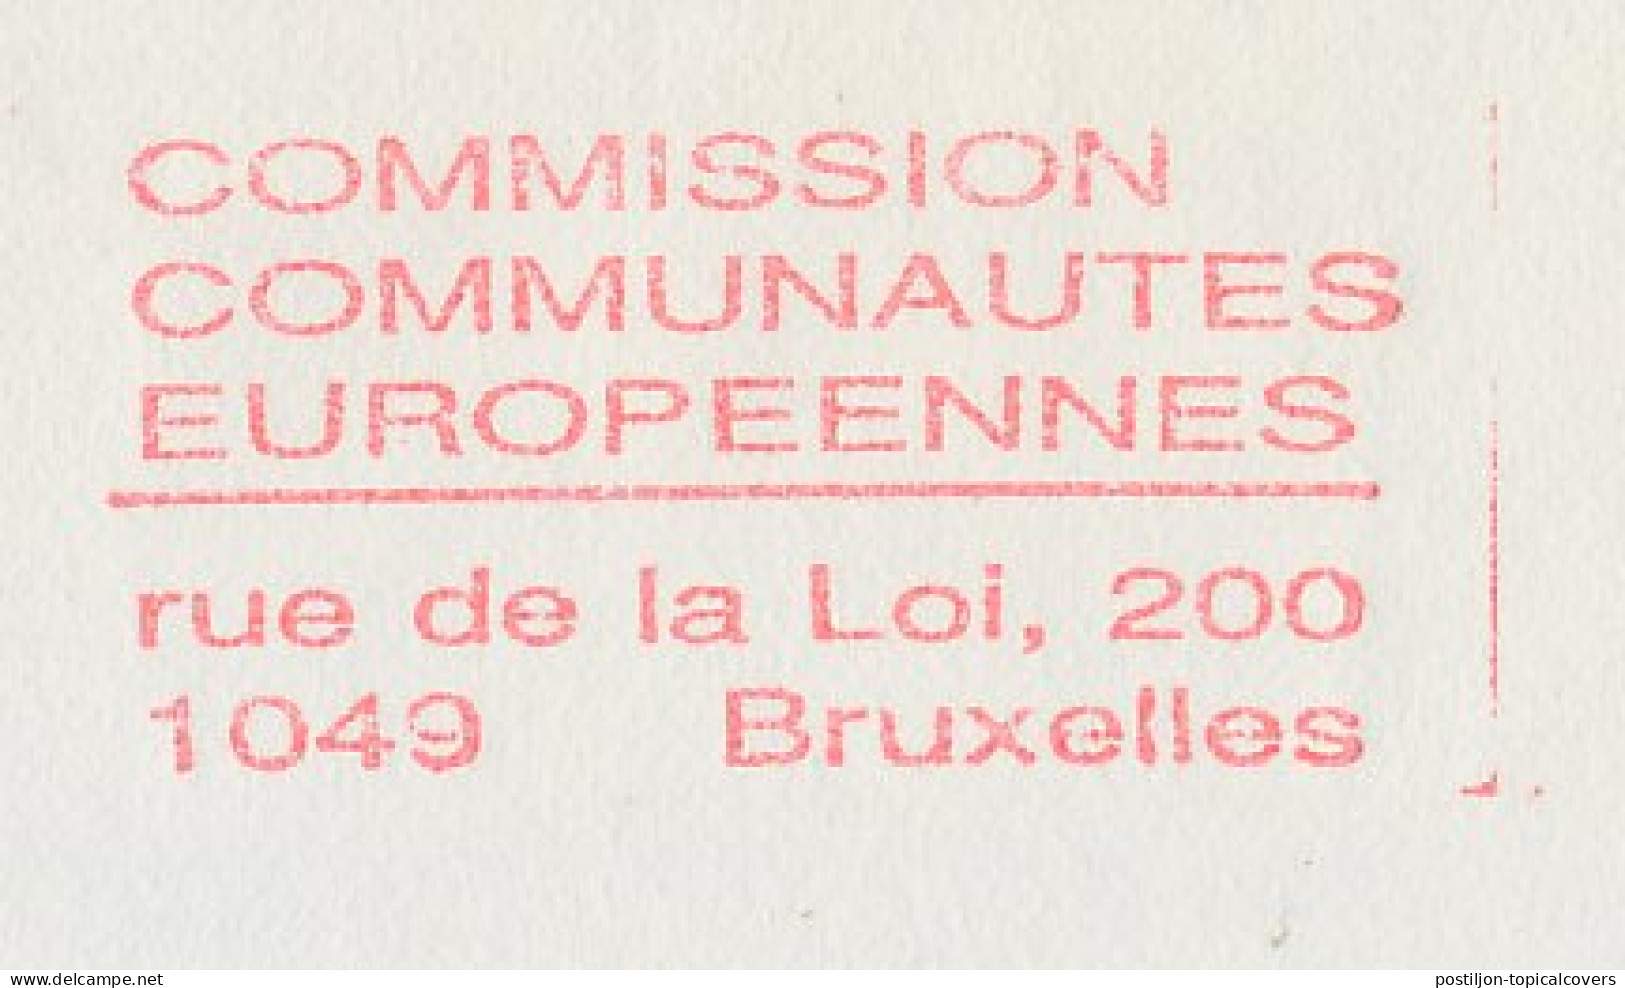 Meter Top Cut Belgium 1994 European Communities Commission - EU-Organe